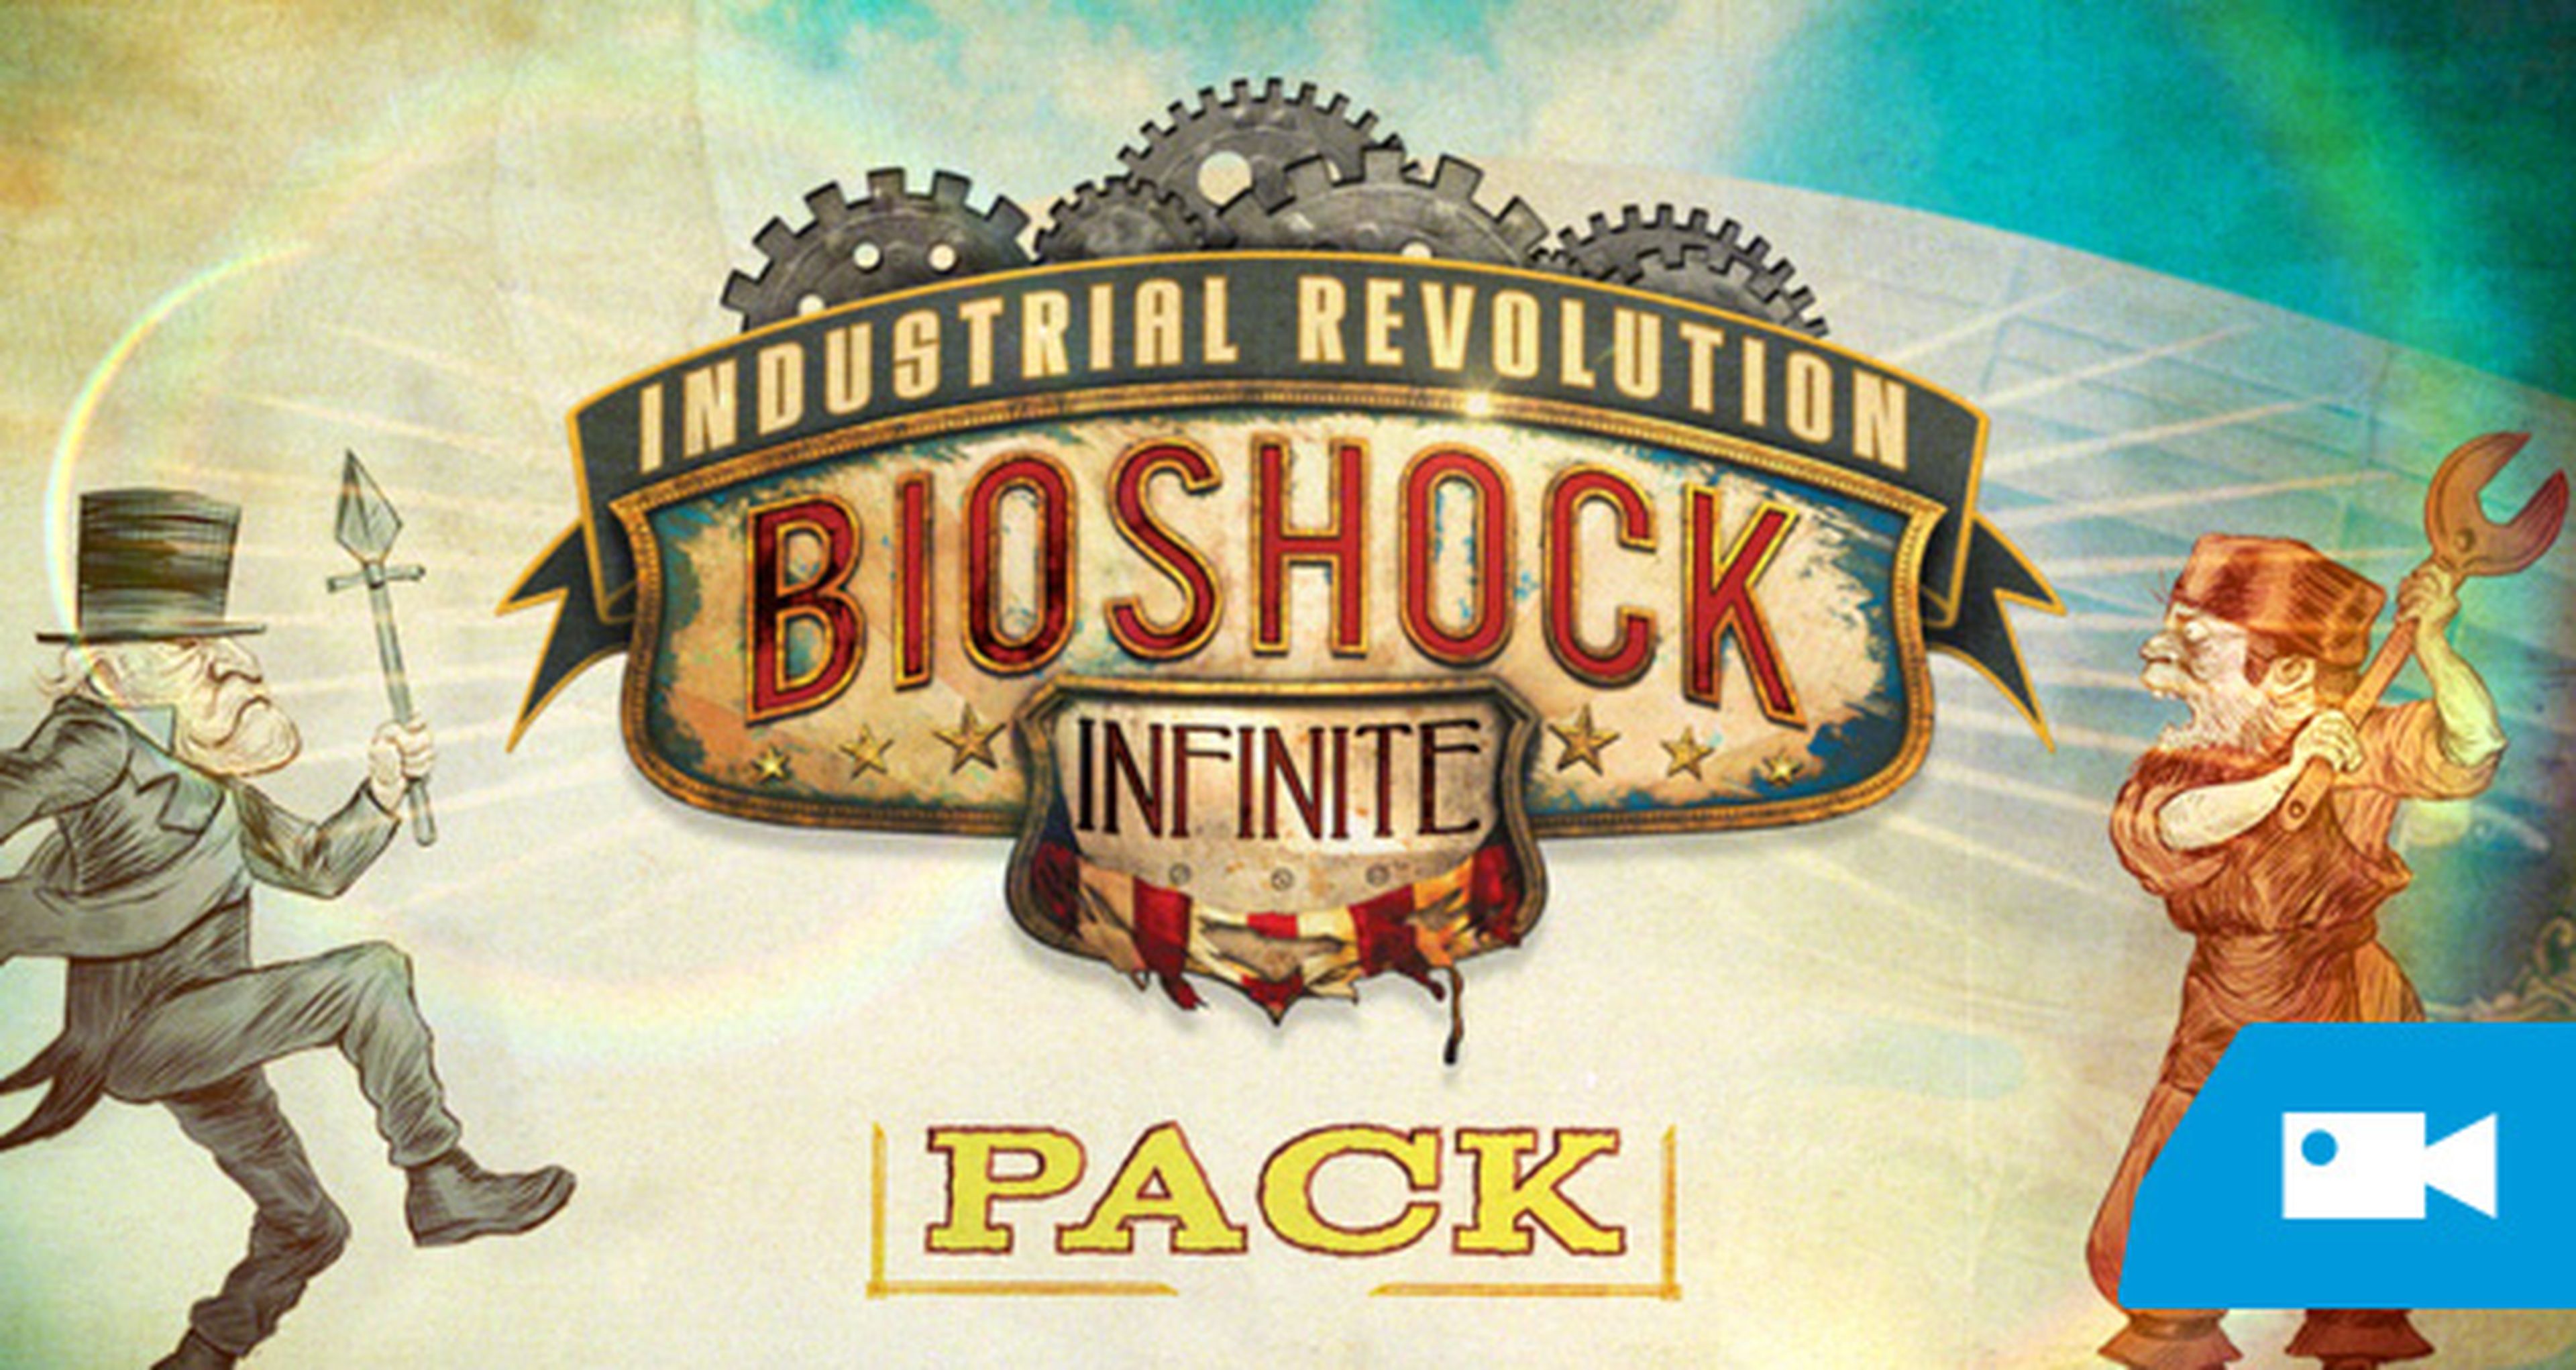 Descarga el primer Bioshock gratis al reservar Infinite